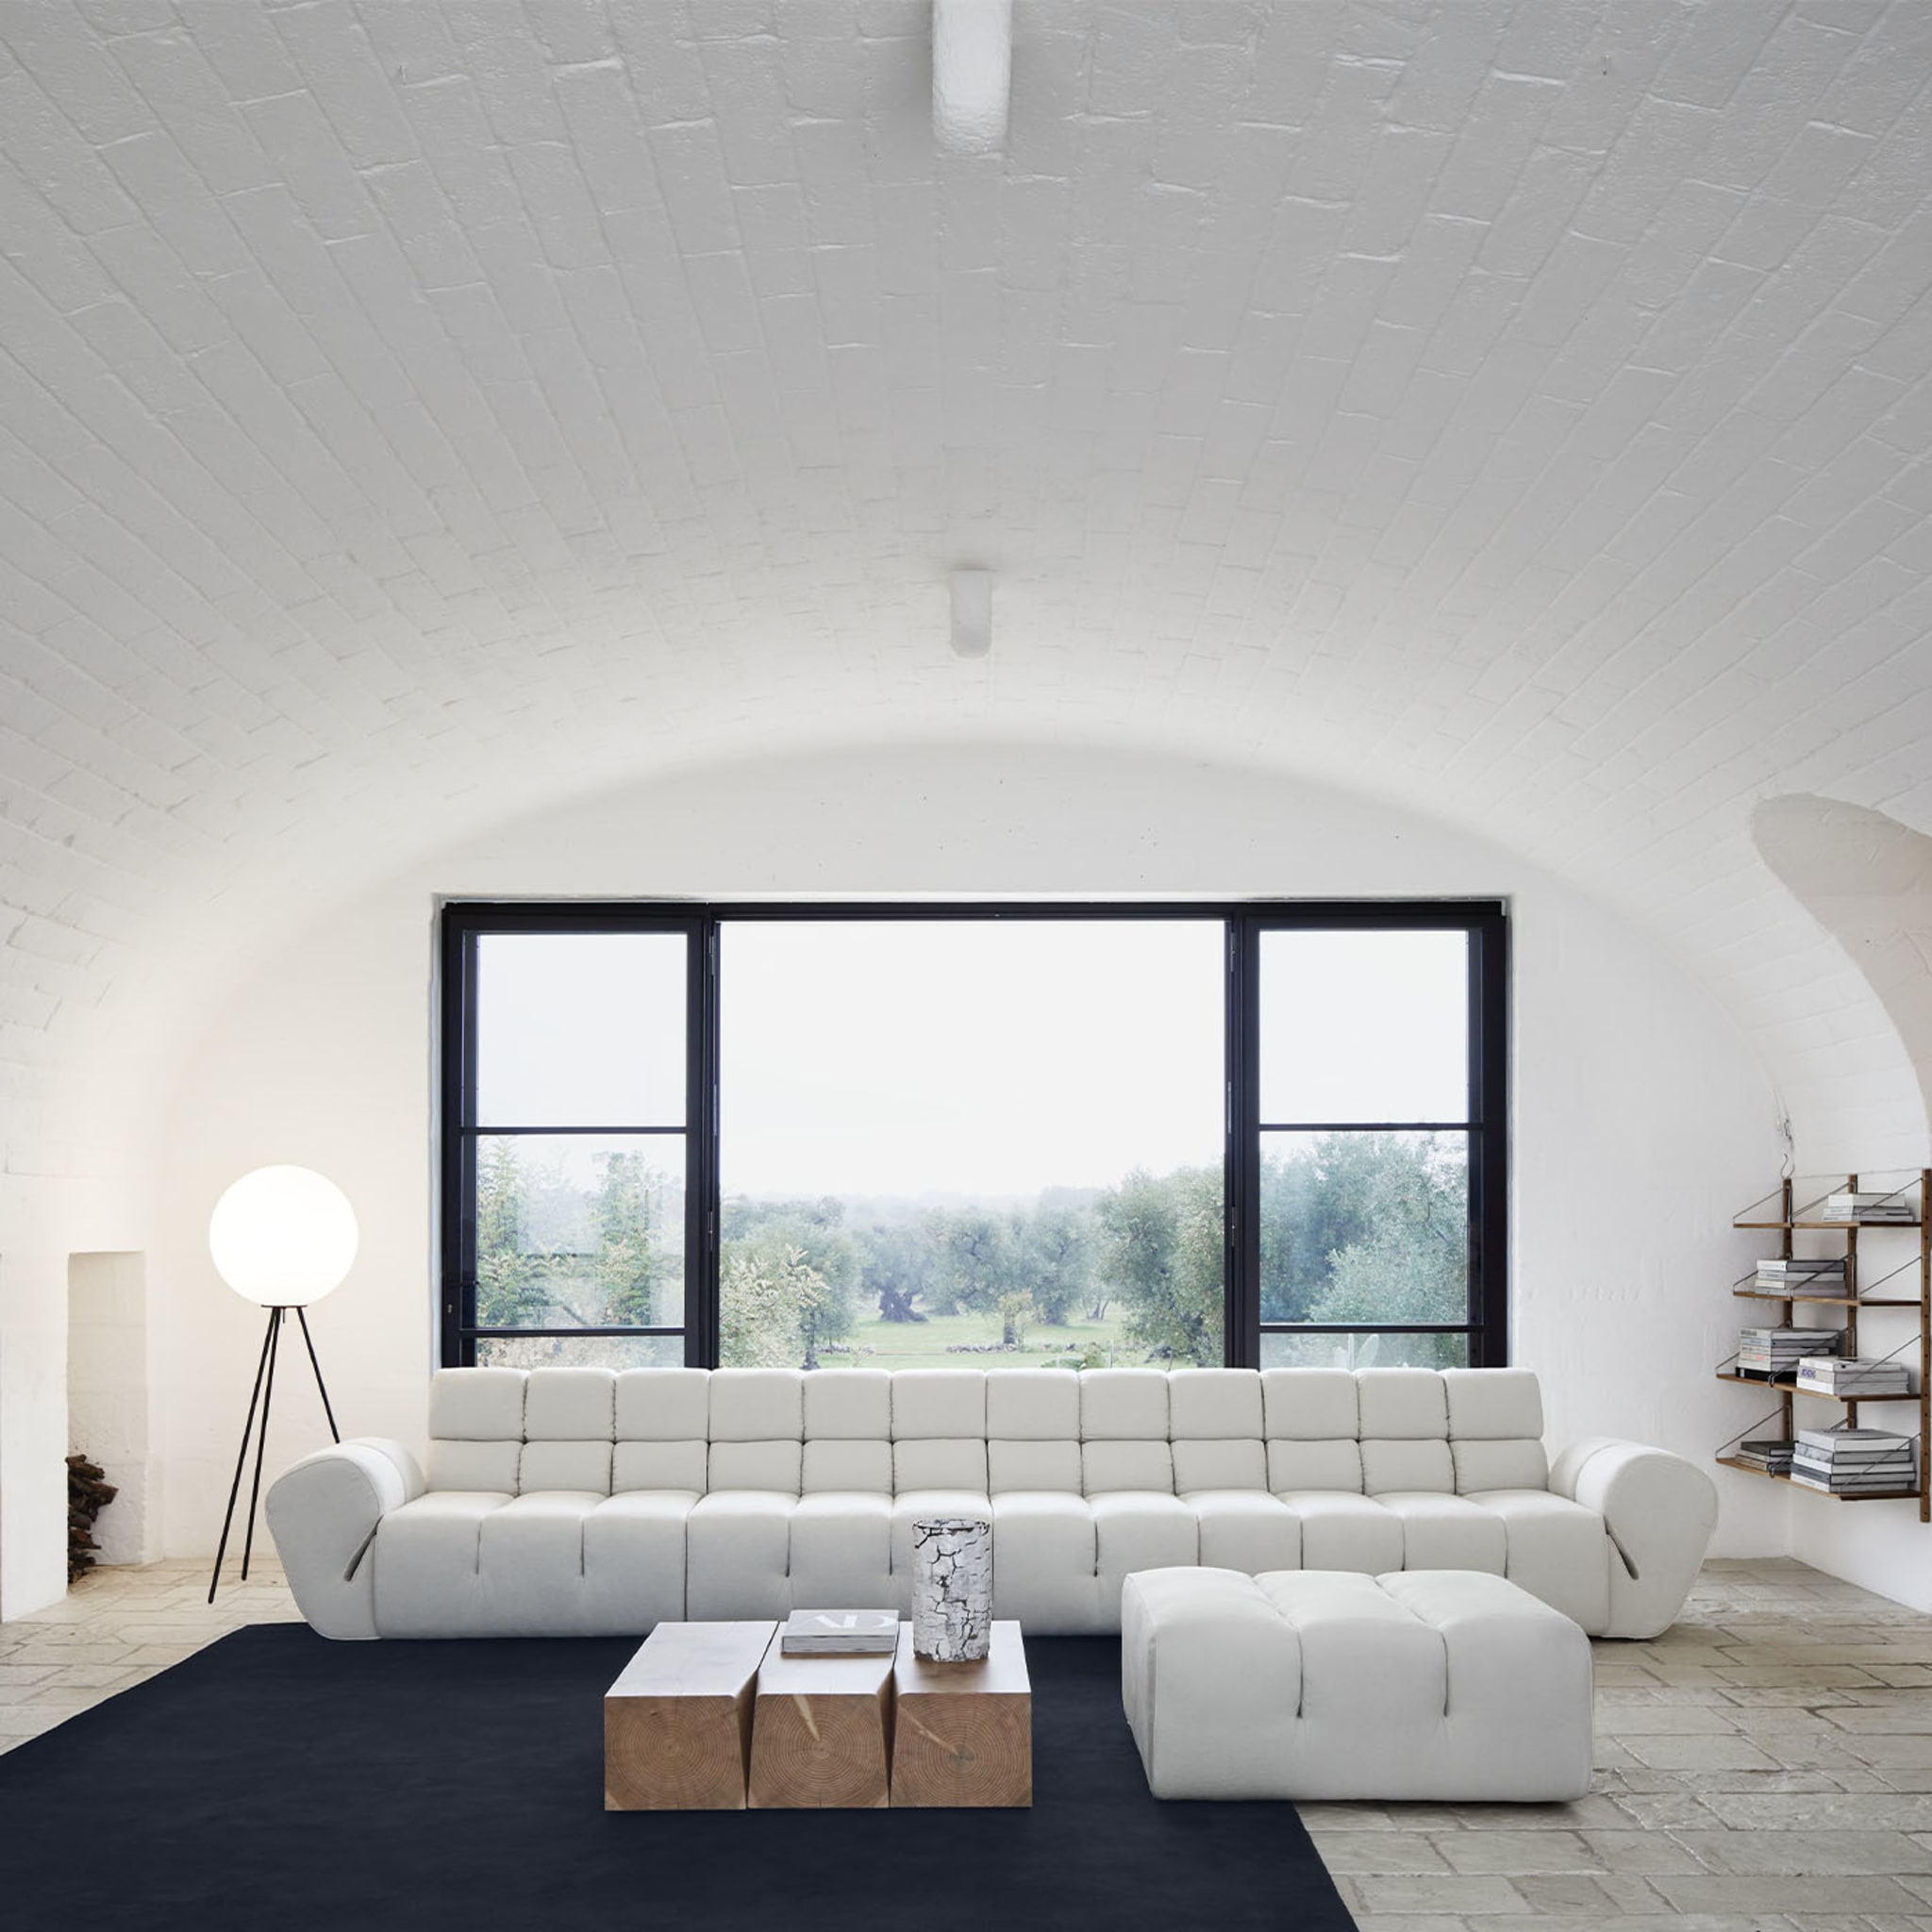 Palmo Modular White Sofa by Emanuel Gargano - Alternative view 5